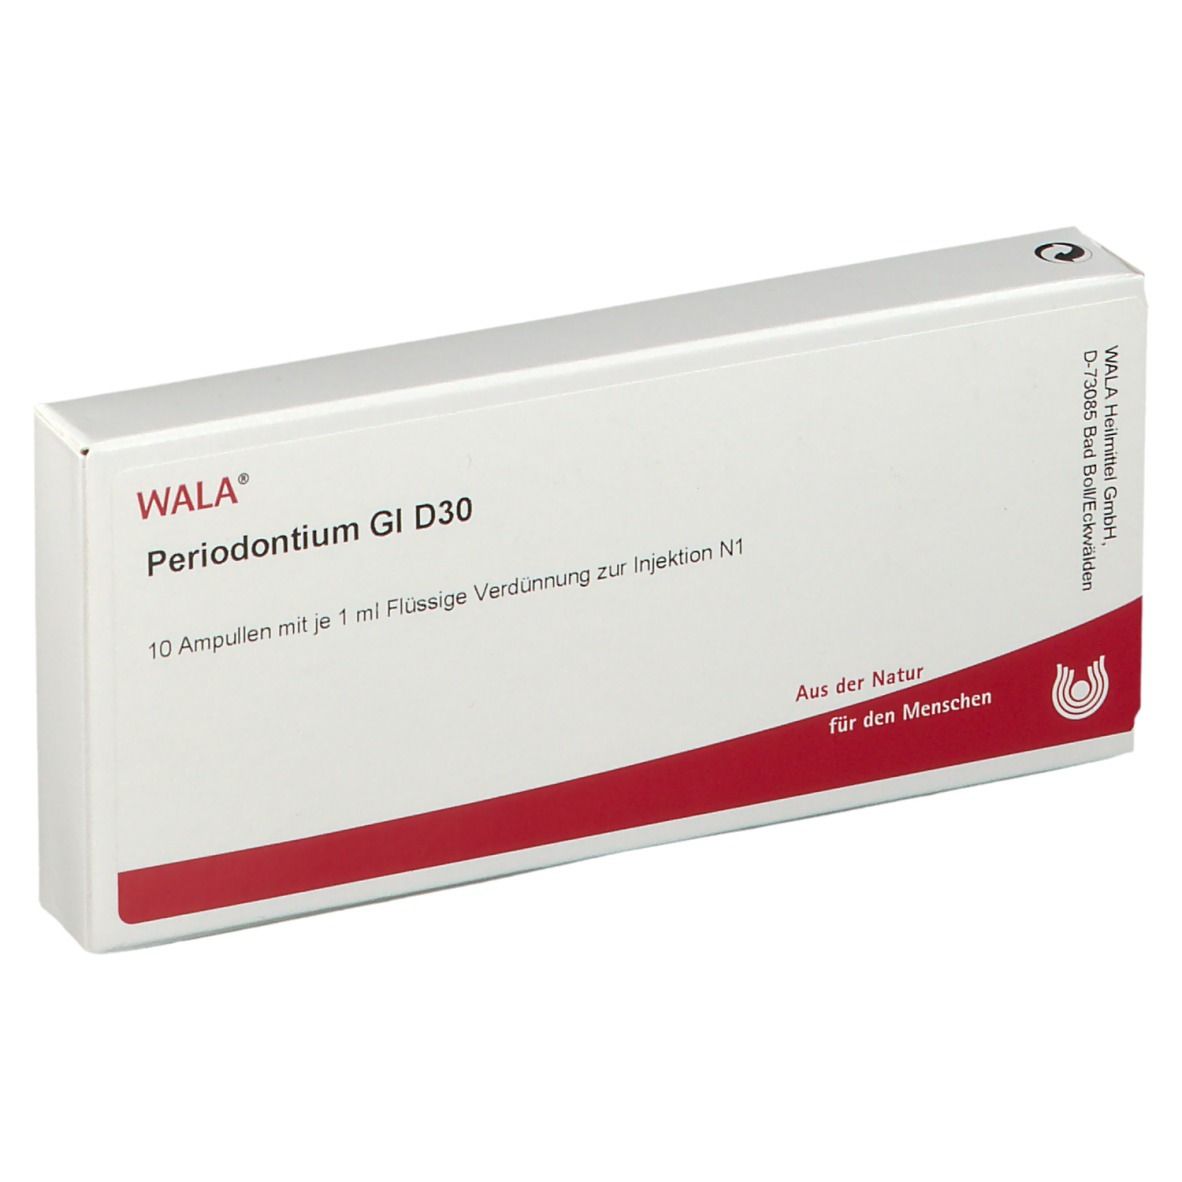 Wala® Periodontium Gl D 30